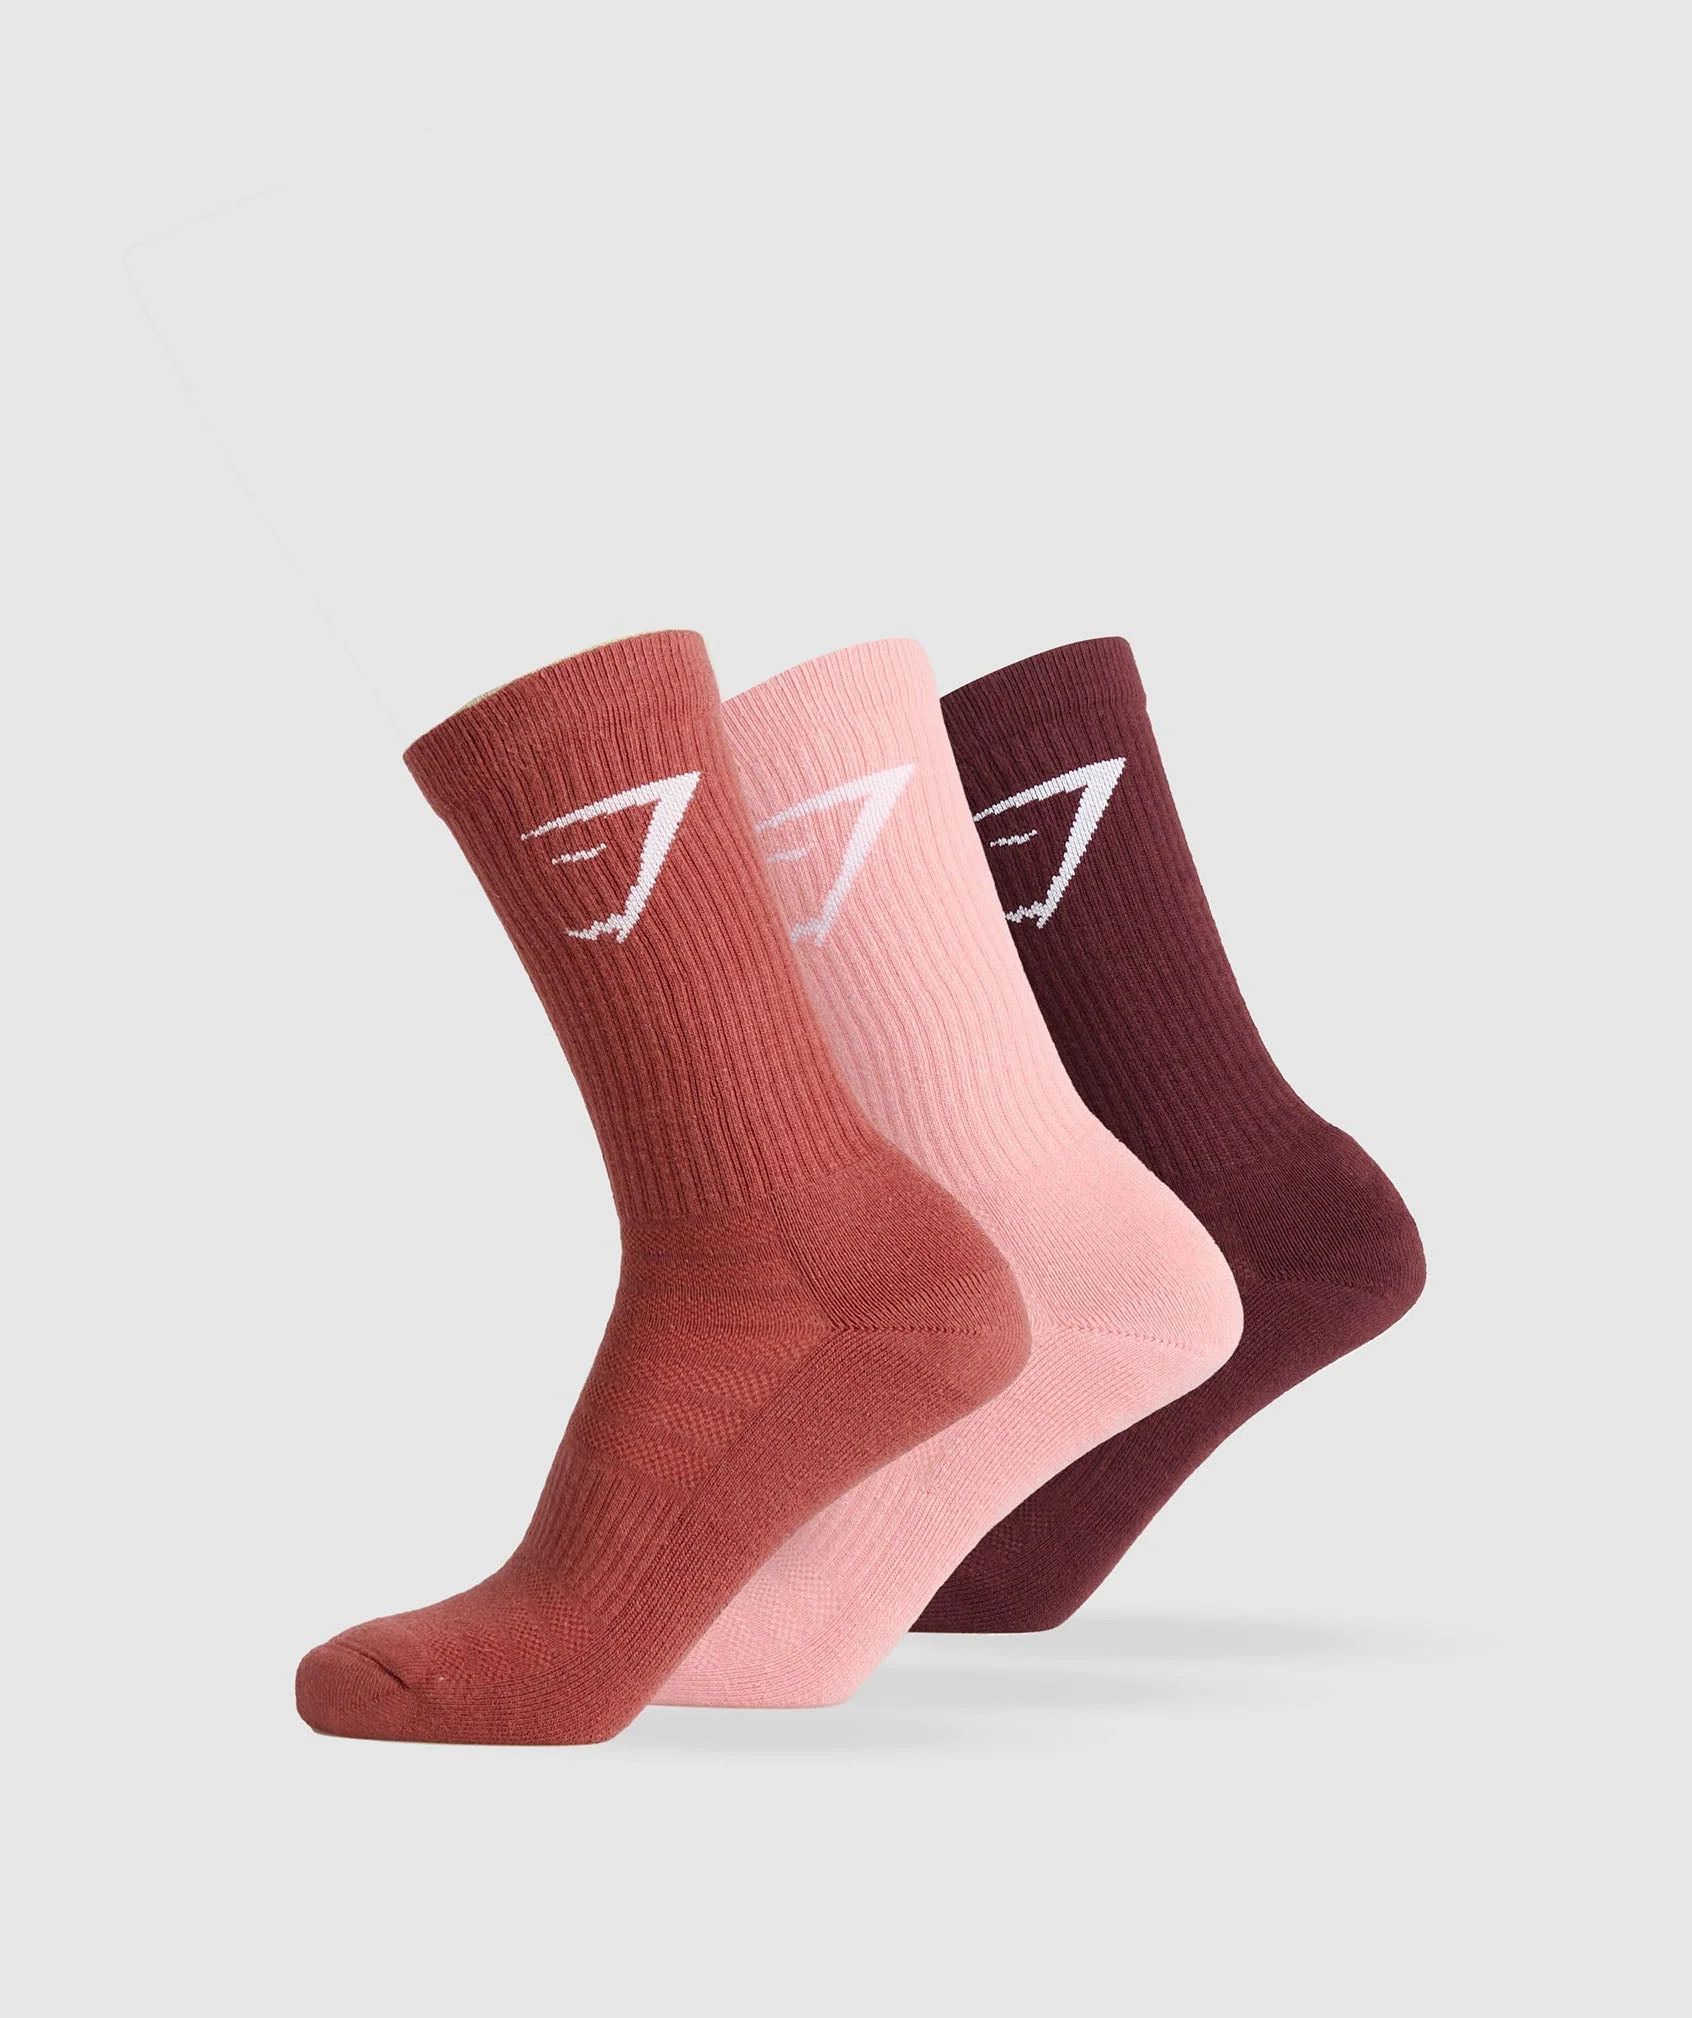 Gymshark Crew Socks 3pk - Rich Maroon/Flamingo Pink/Rust Red | Gymshark US